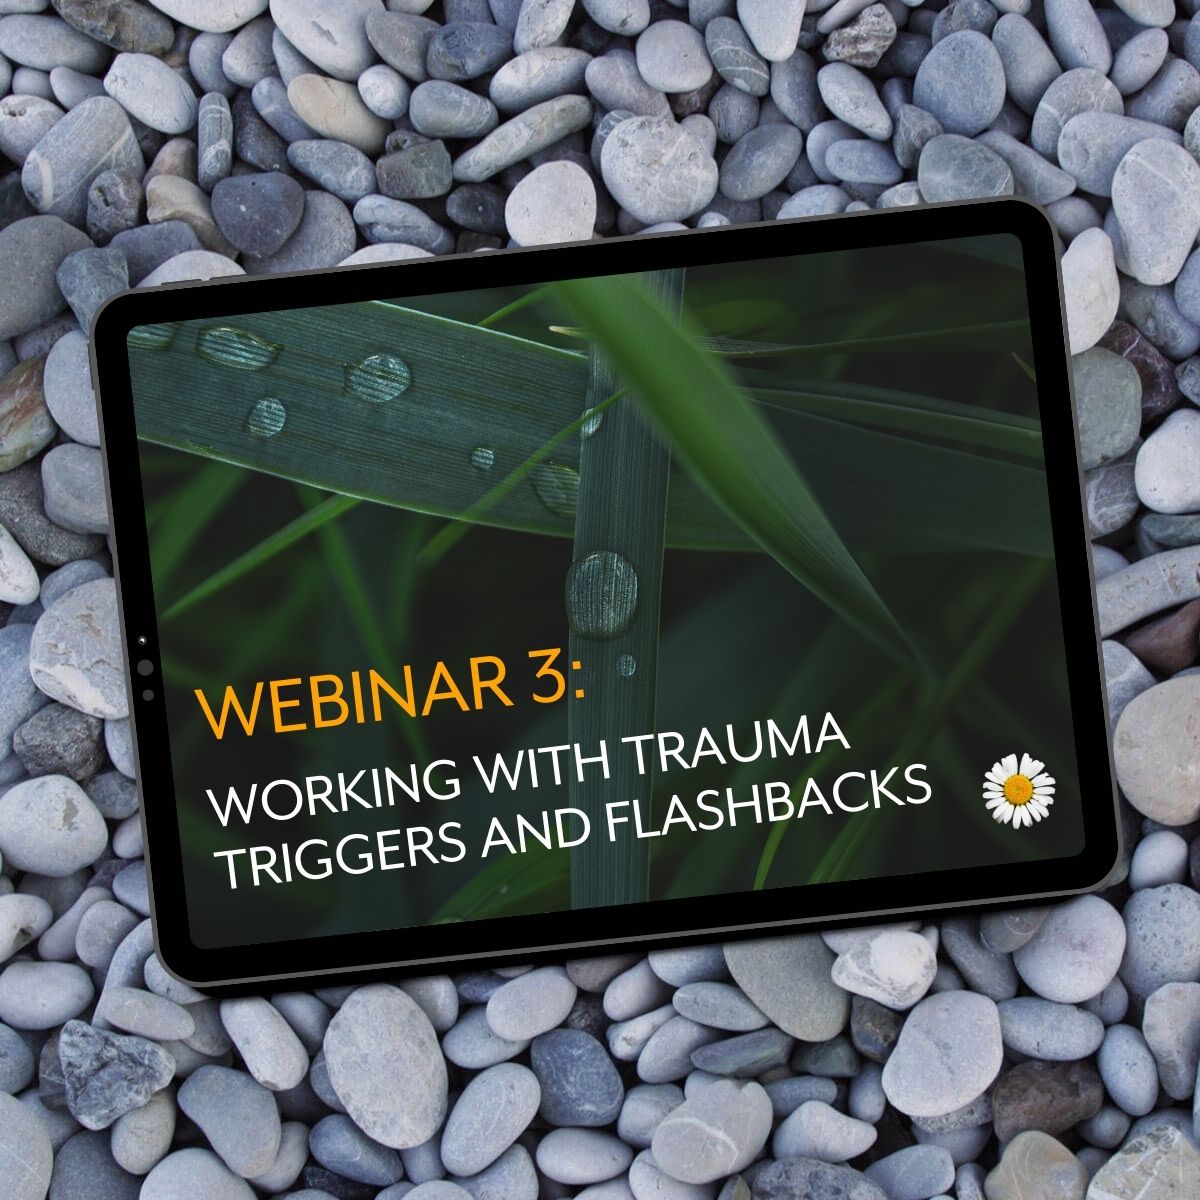 Webinar 3: Working with Trauma Triggers and Flashbacks